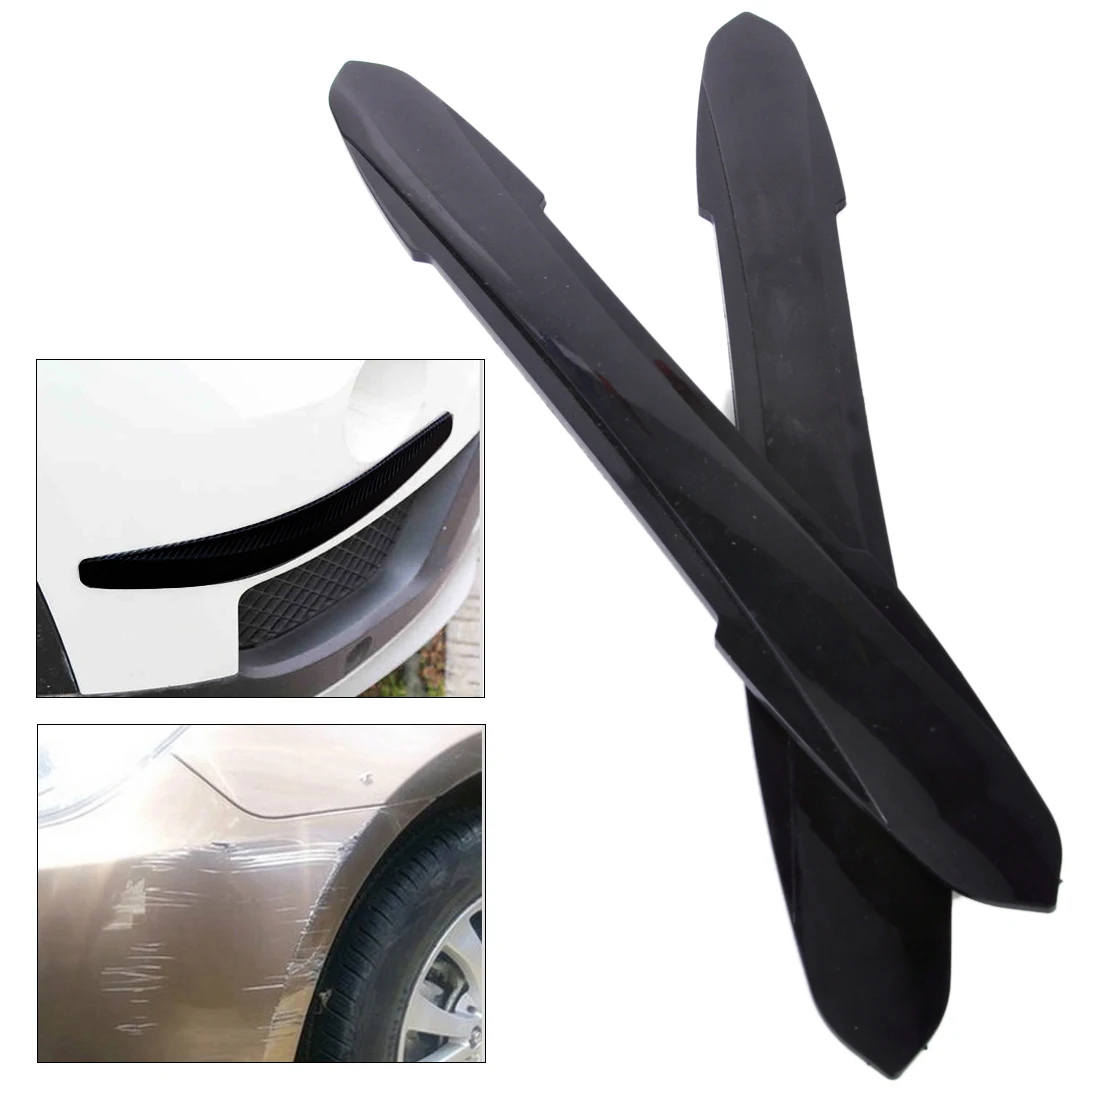 2X Rubber Carbon Fiber Car Bumper Protector Corner Guard Front Rear Anti-Scratch